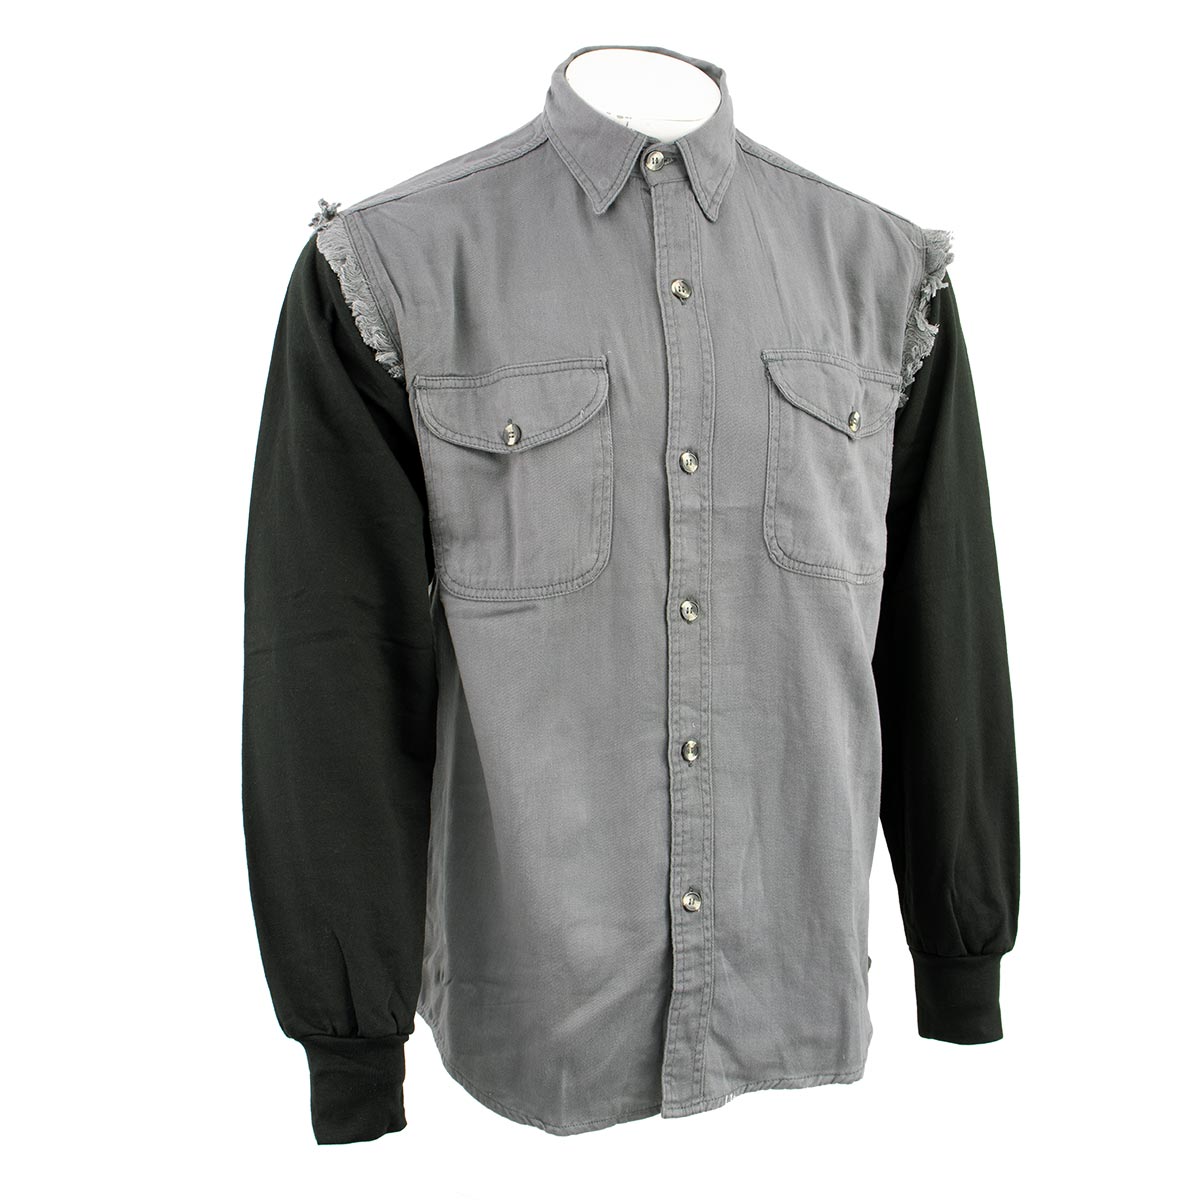 NexGen DM4444 Men's Grey with Black Long Sleeve Button Down Shirt